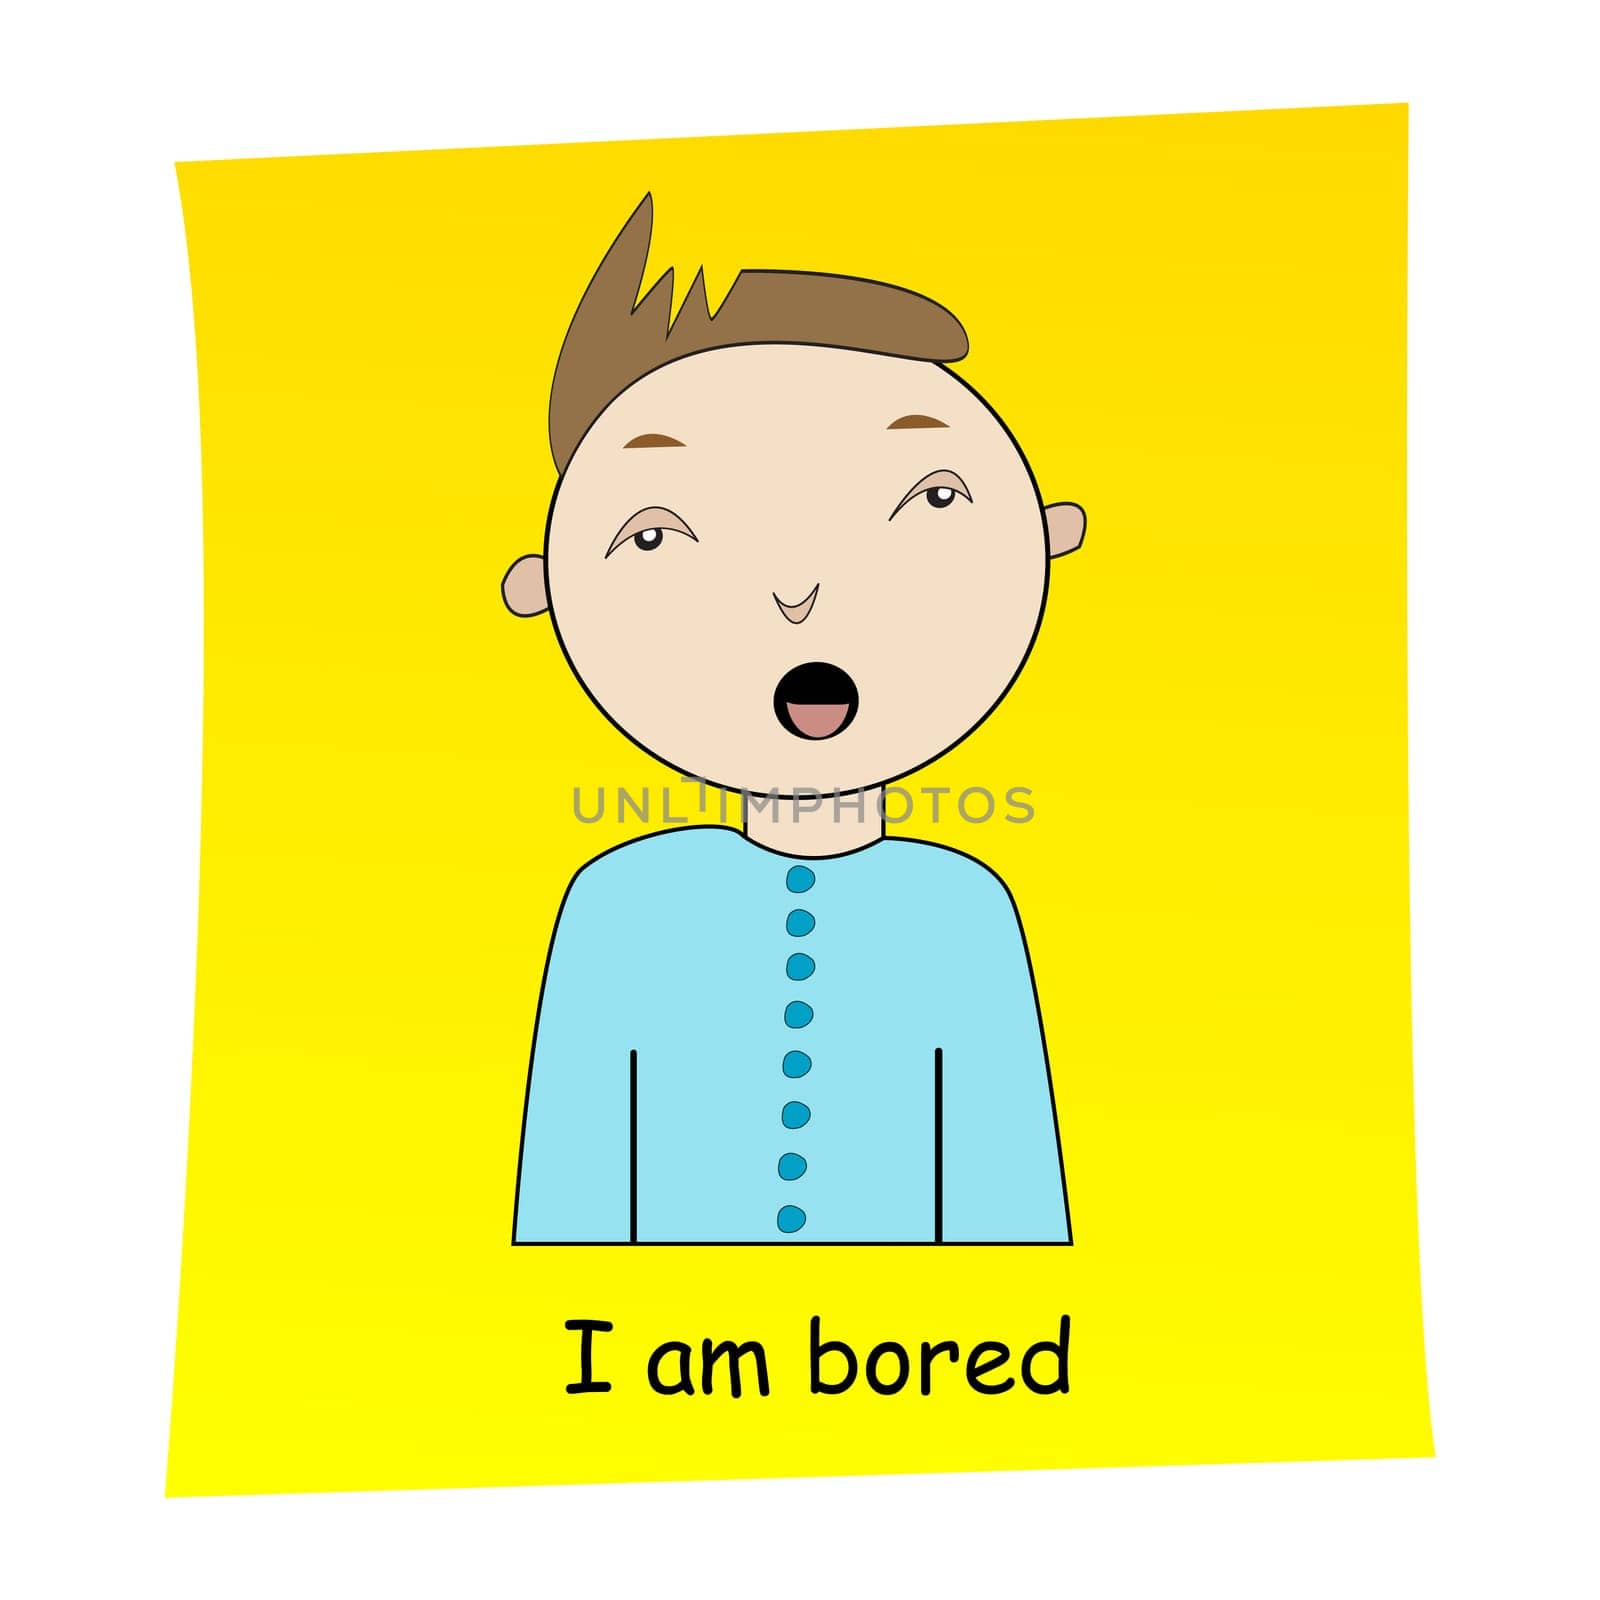 I am bored concept.Cartoon hand drawn boy with bored expression by hibrida13